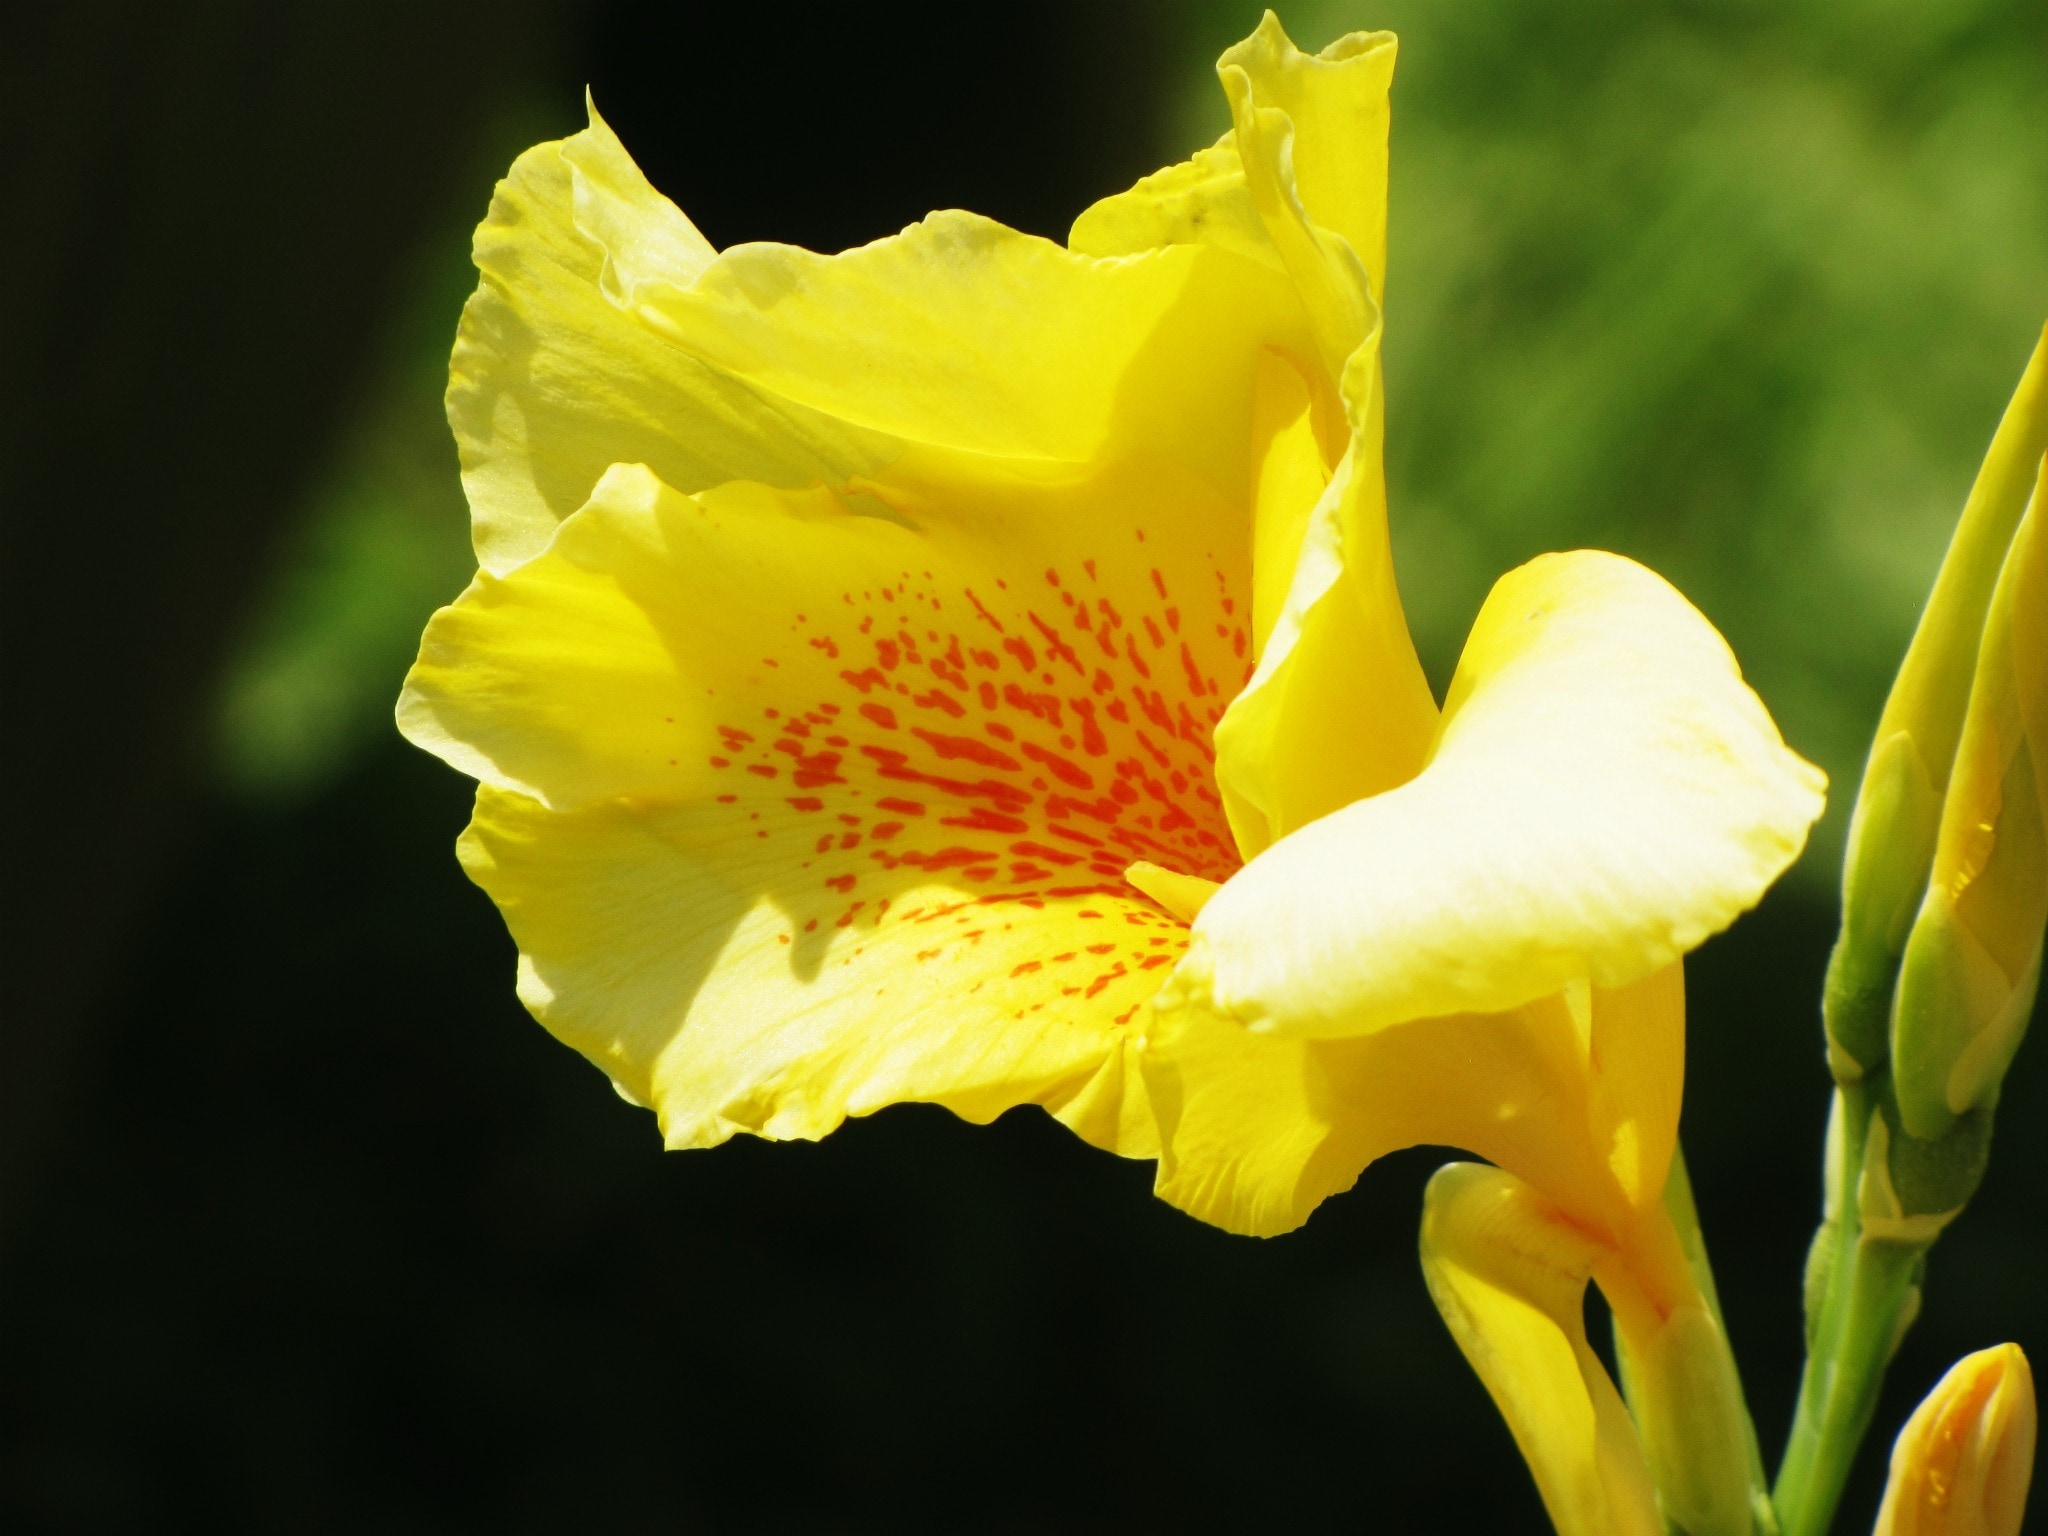 yellow petaled flower blooming during daytime